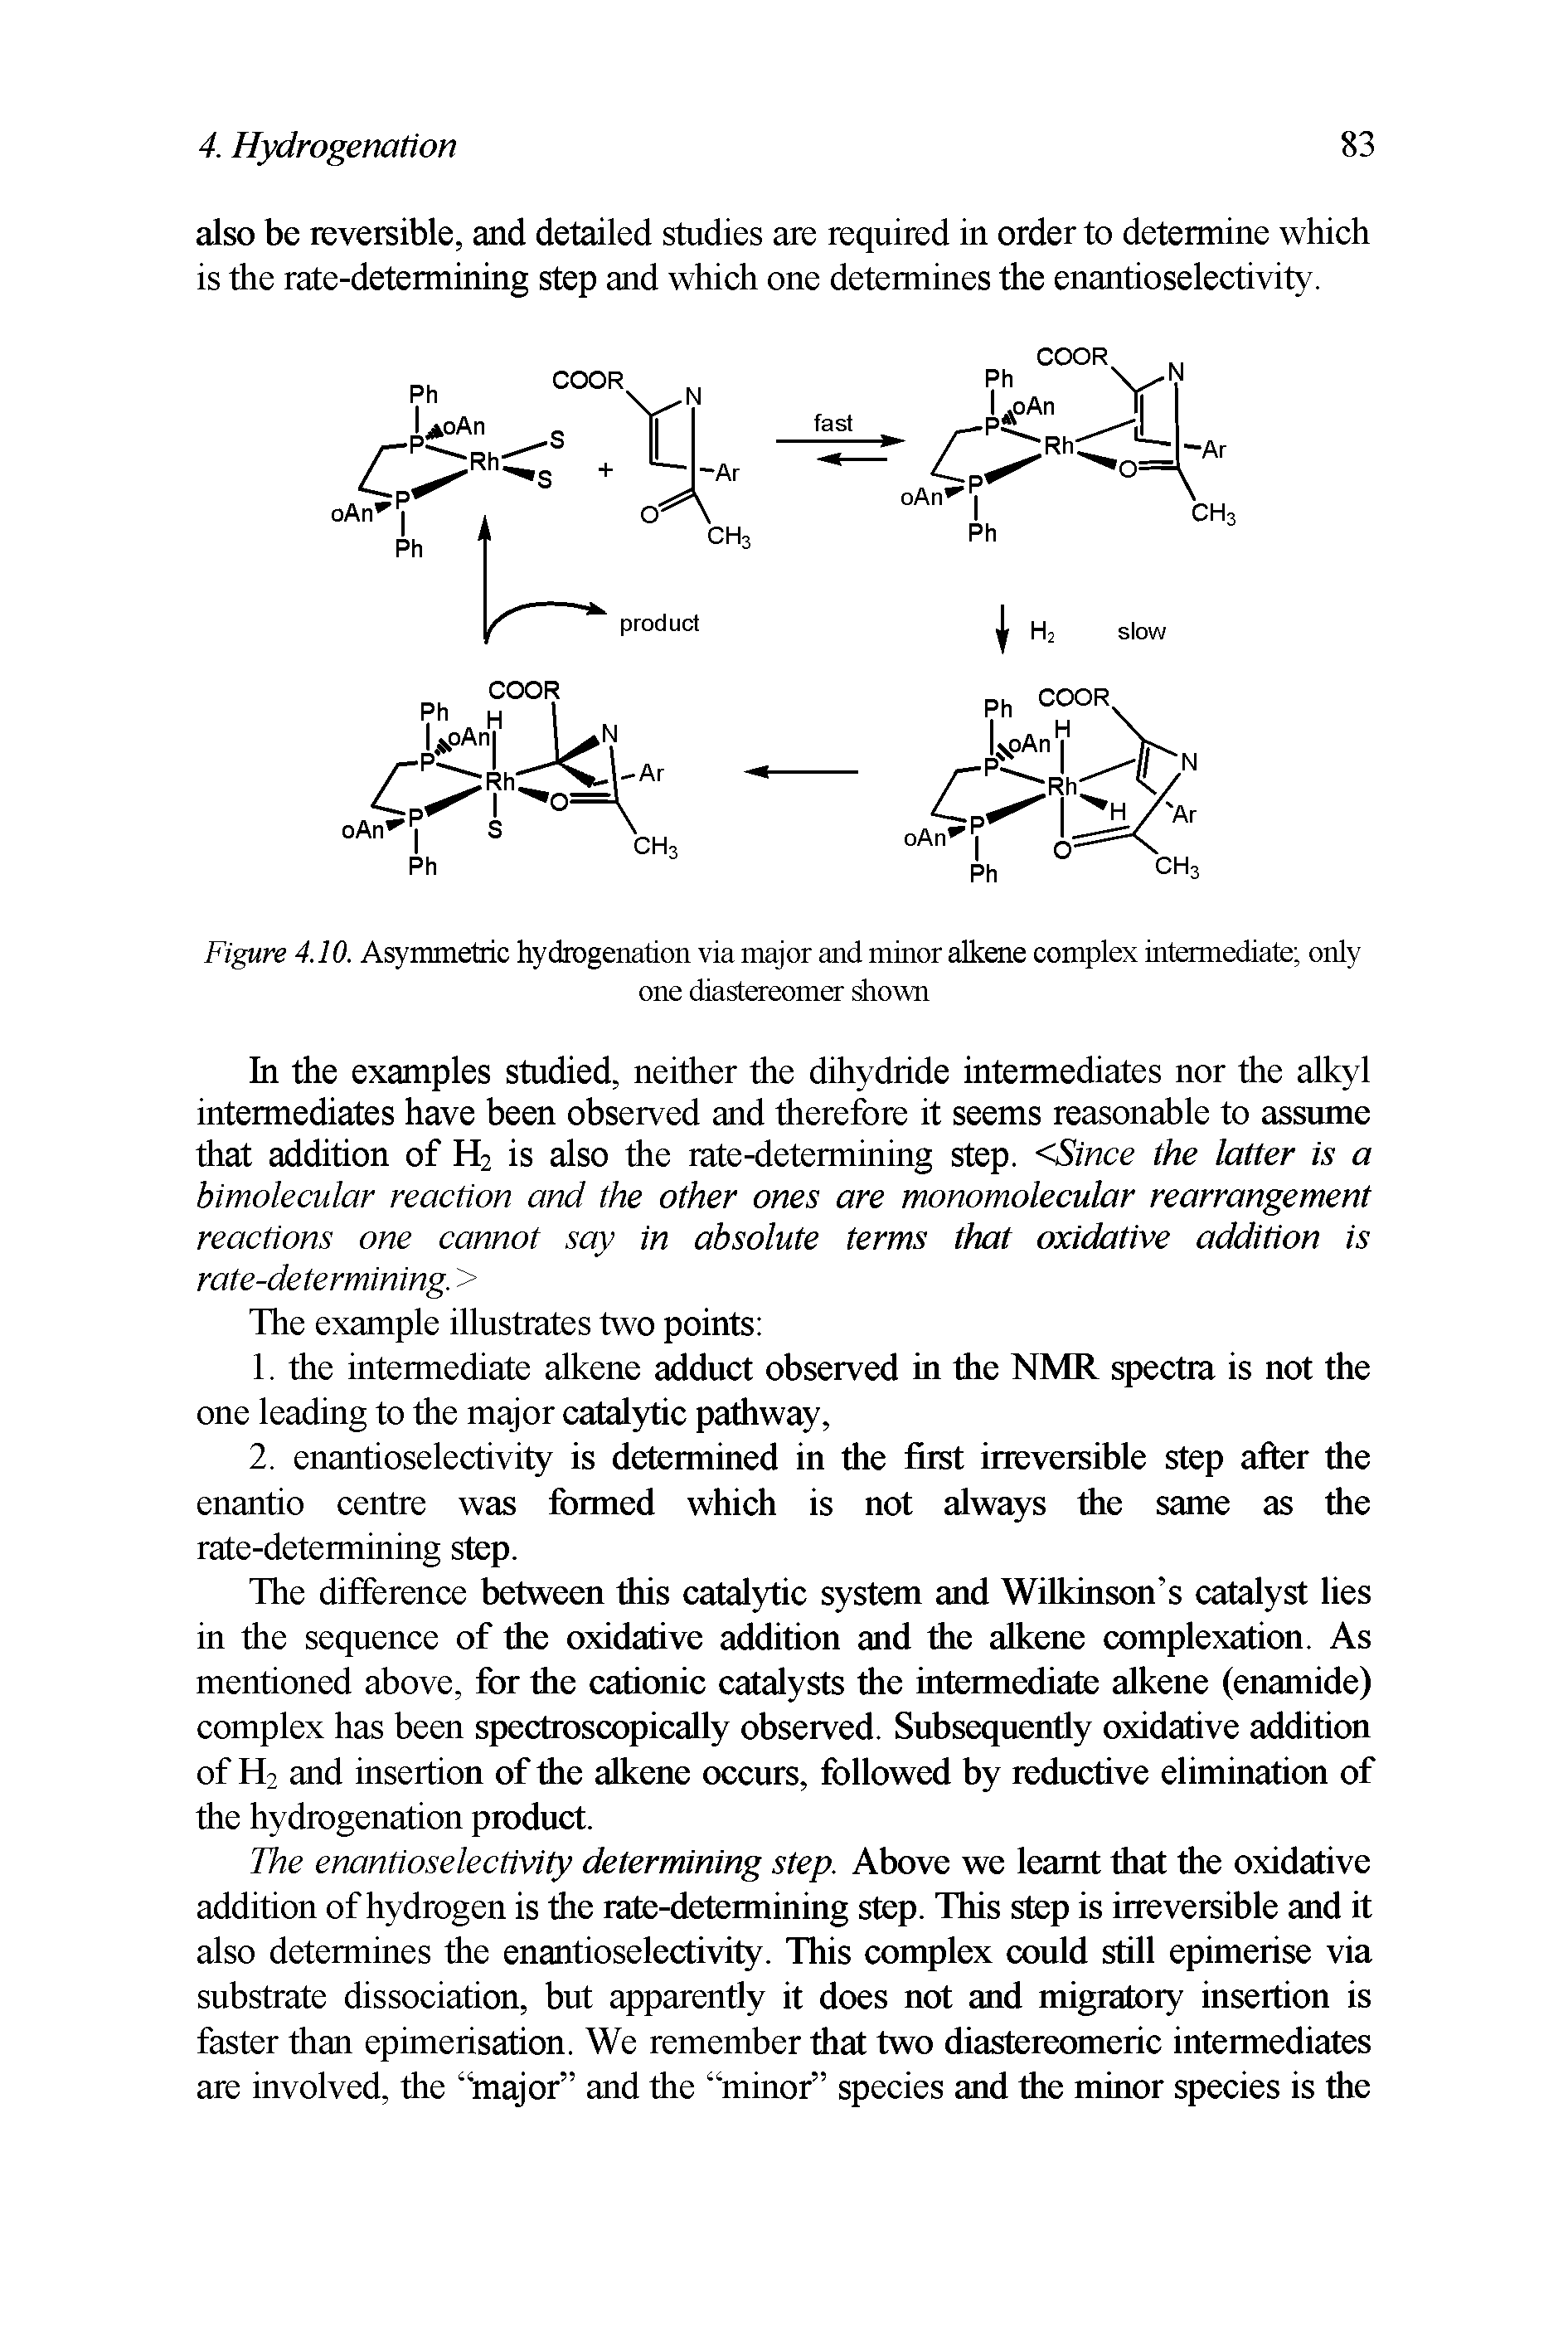 Figure 4.10. Asymmetric hydrogenation via major and minor alkene complex intermediate only...